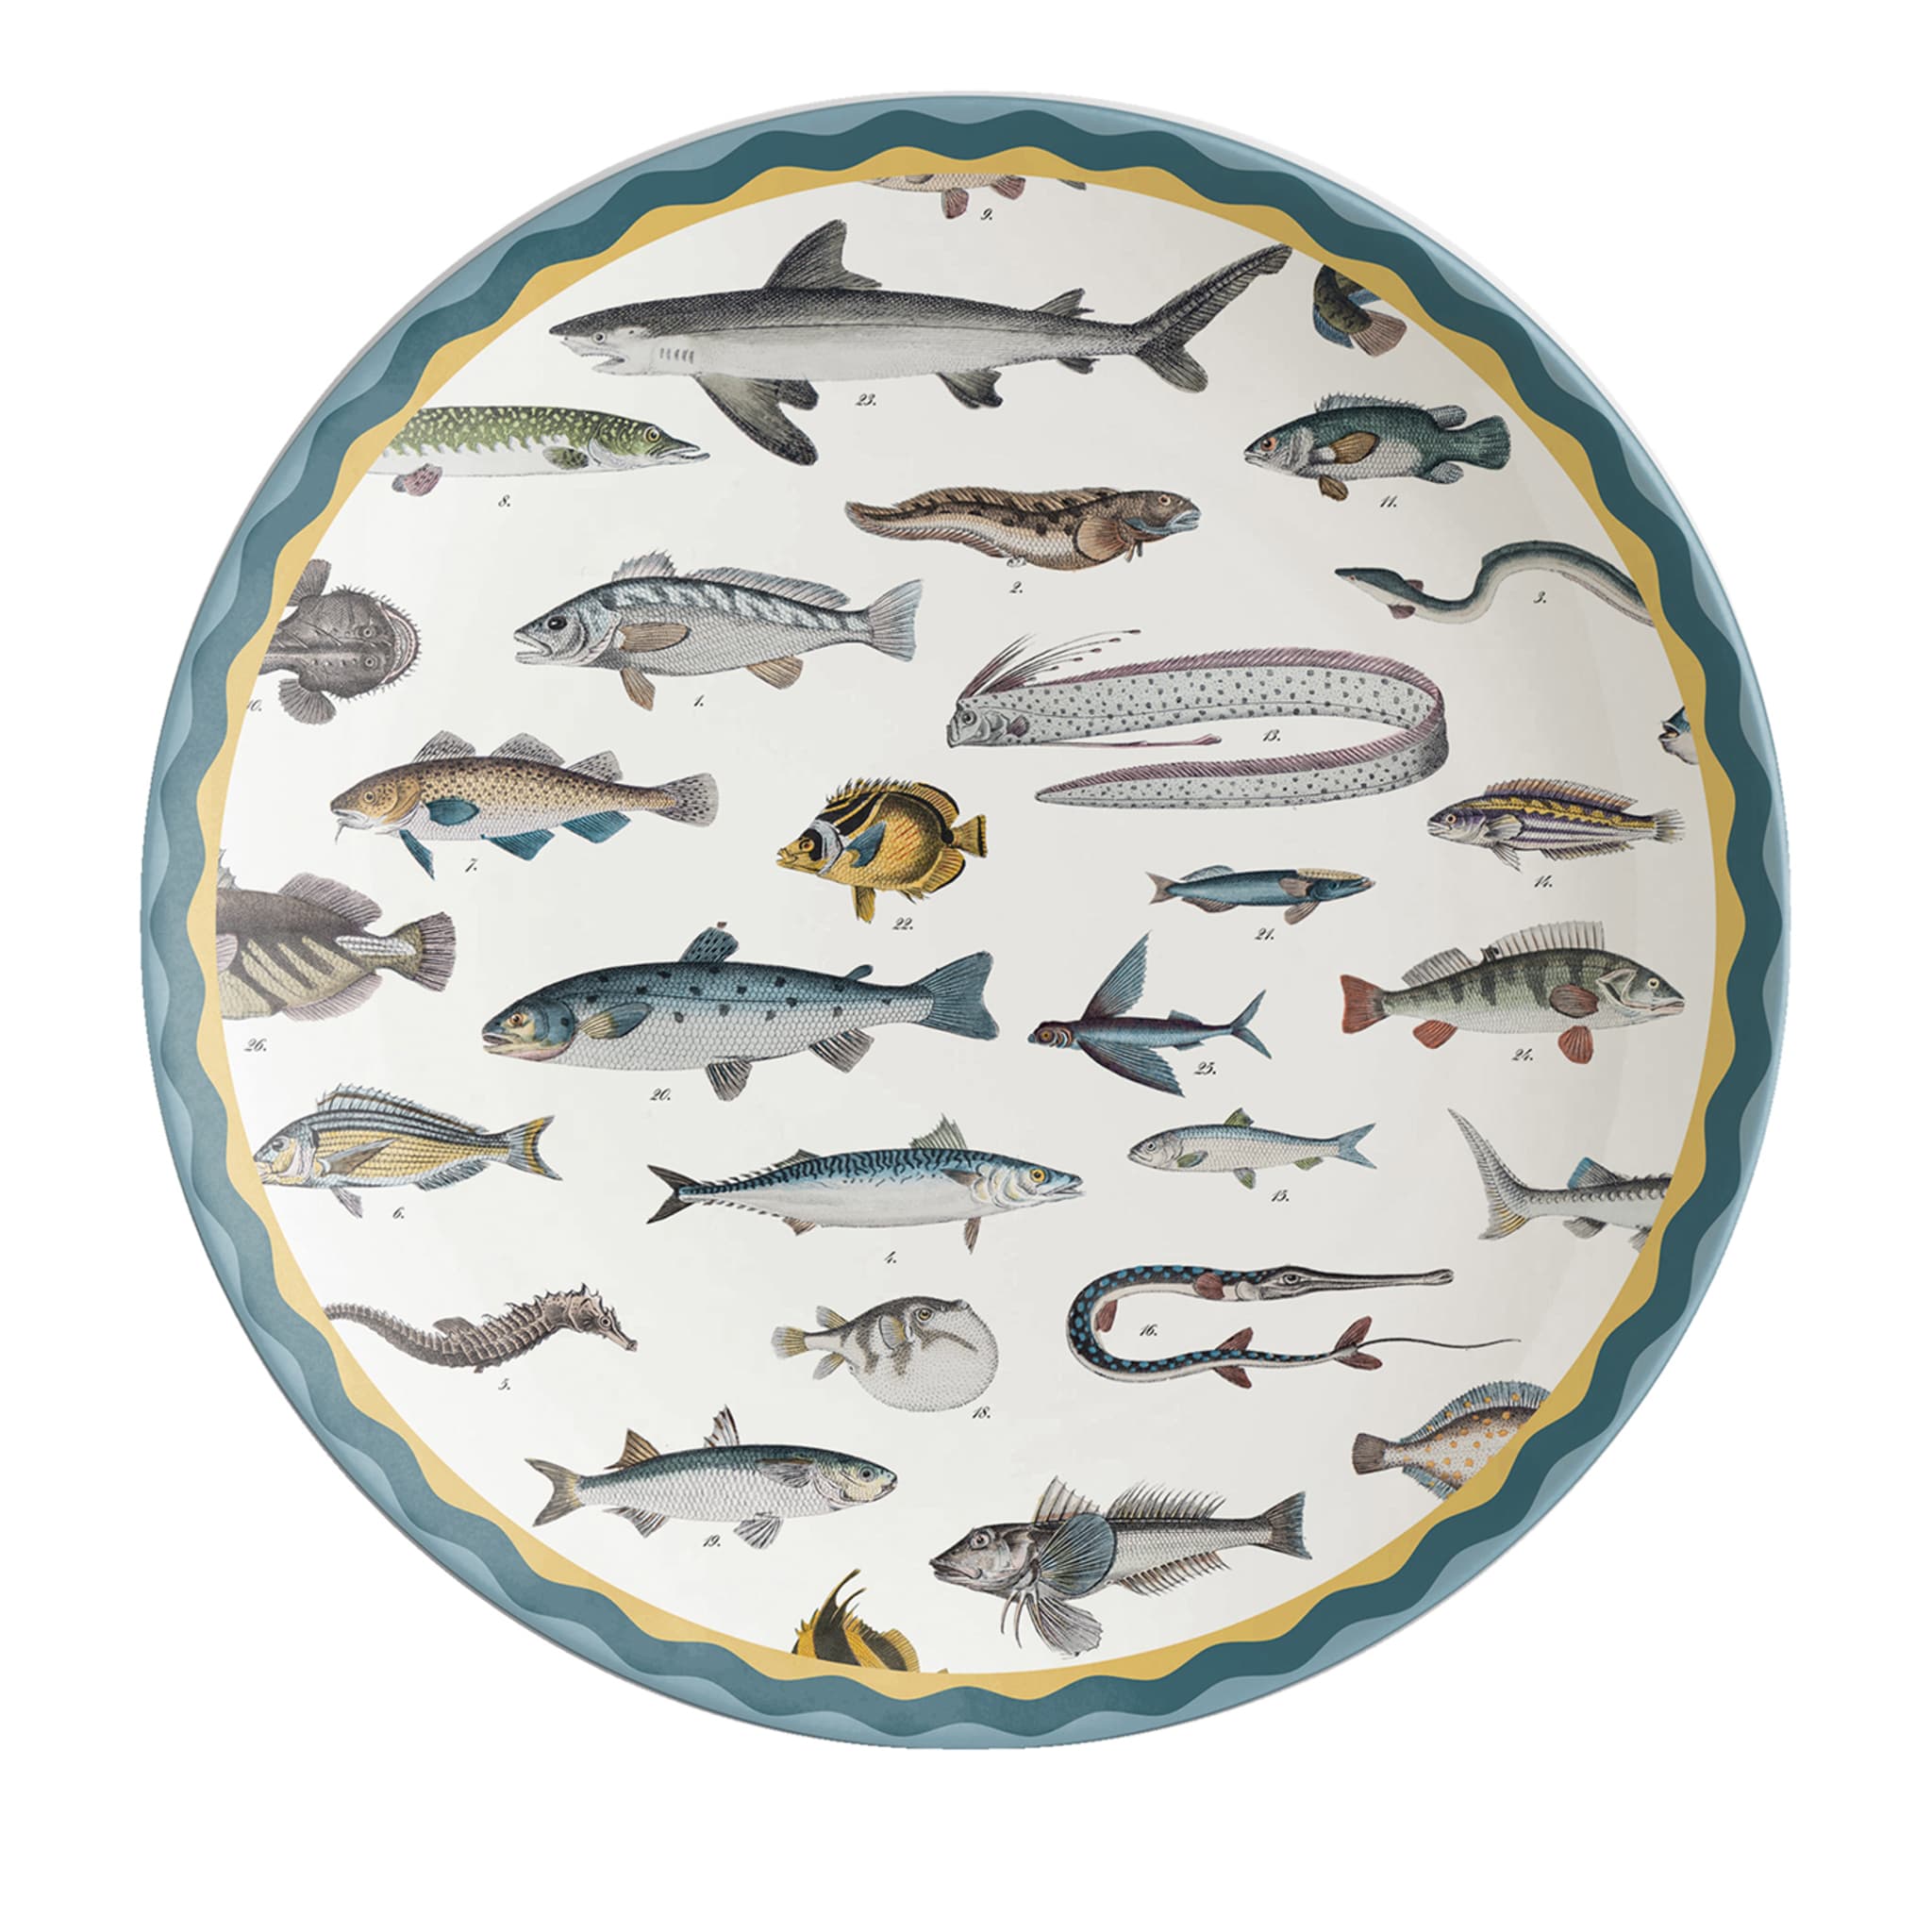 Cabinet de Curiosités Fisch Ladeteller - Hauptansicht